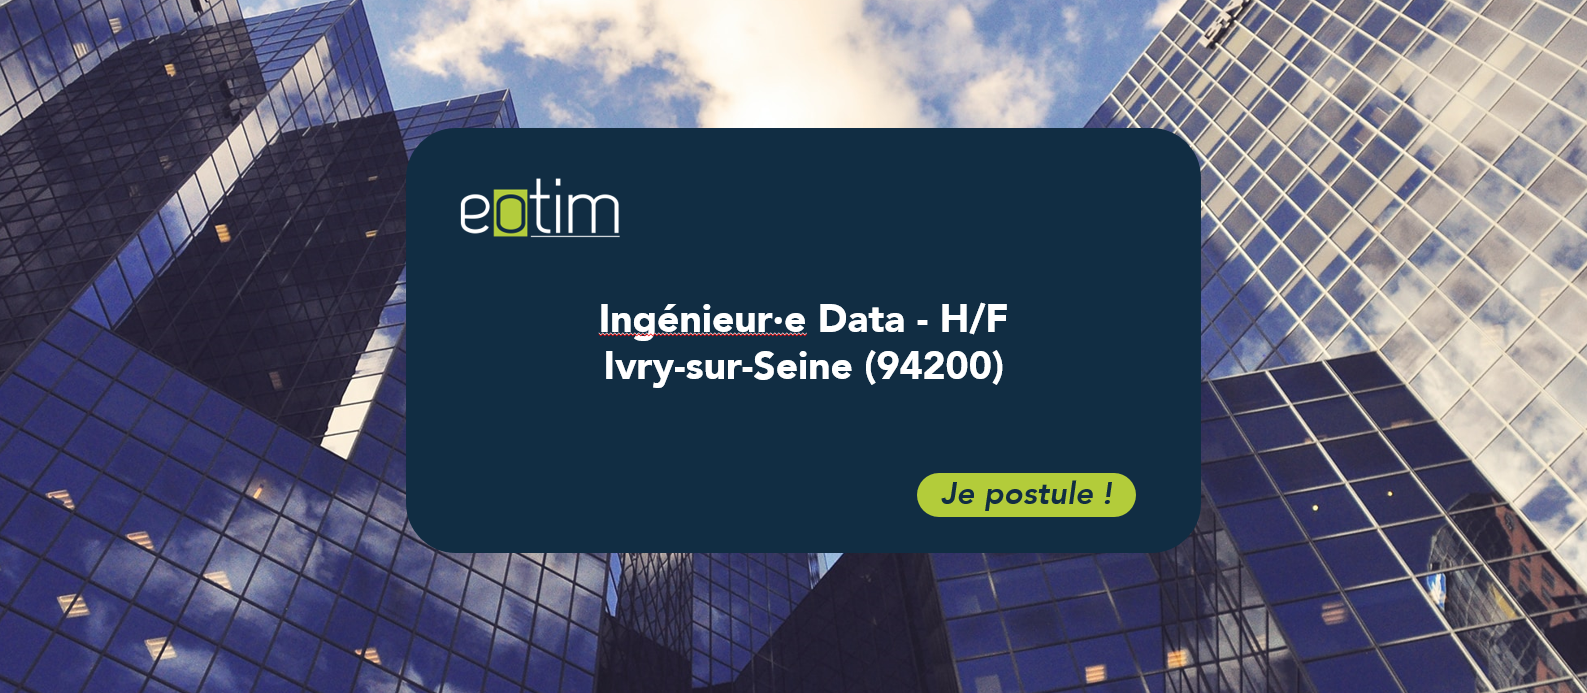 Ingénieur·e Data - H/F